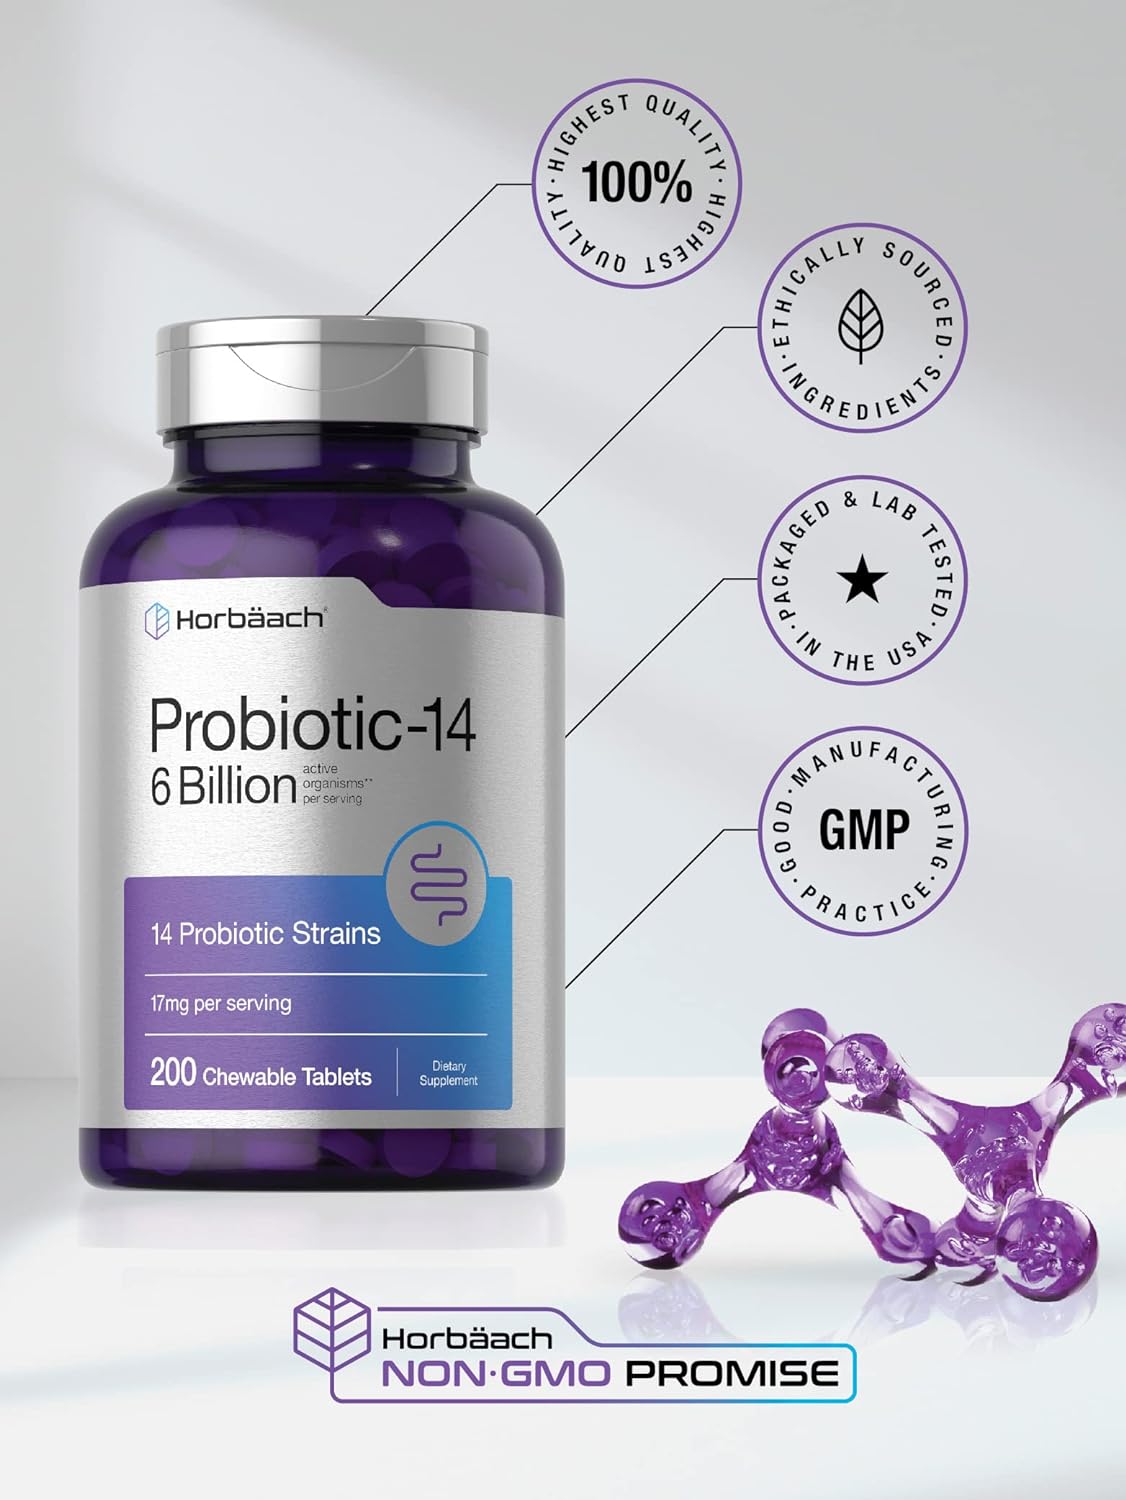 Horbäach Chewable Probiotics 6 Billion CFUs | 200 Tablets | 14 Probiotic Strains | Vegetarian, Non-GMO & Gluten Free Supplement